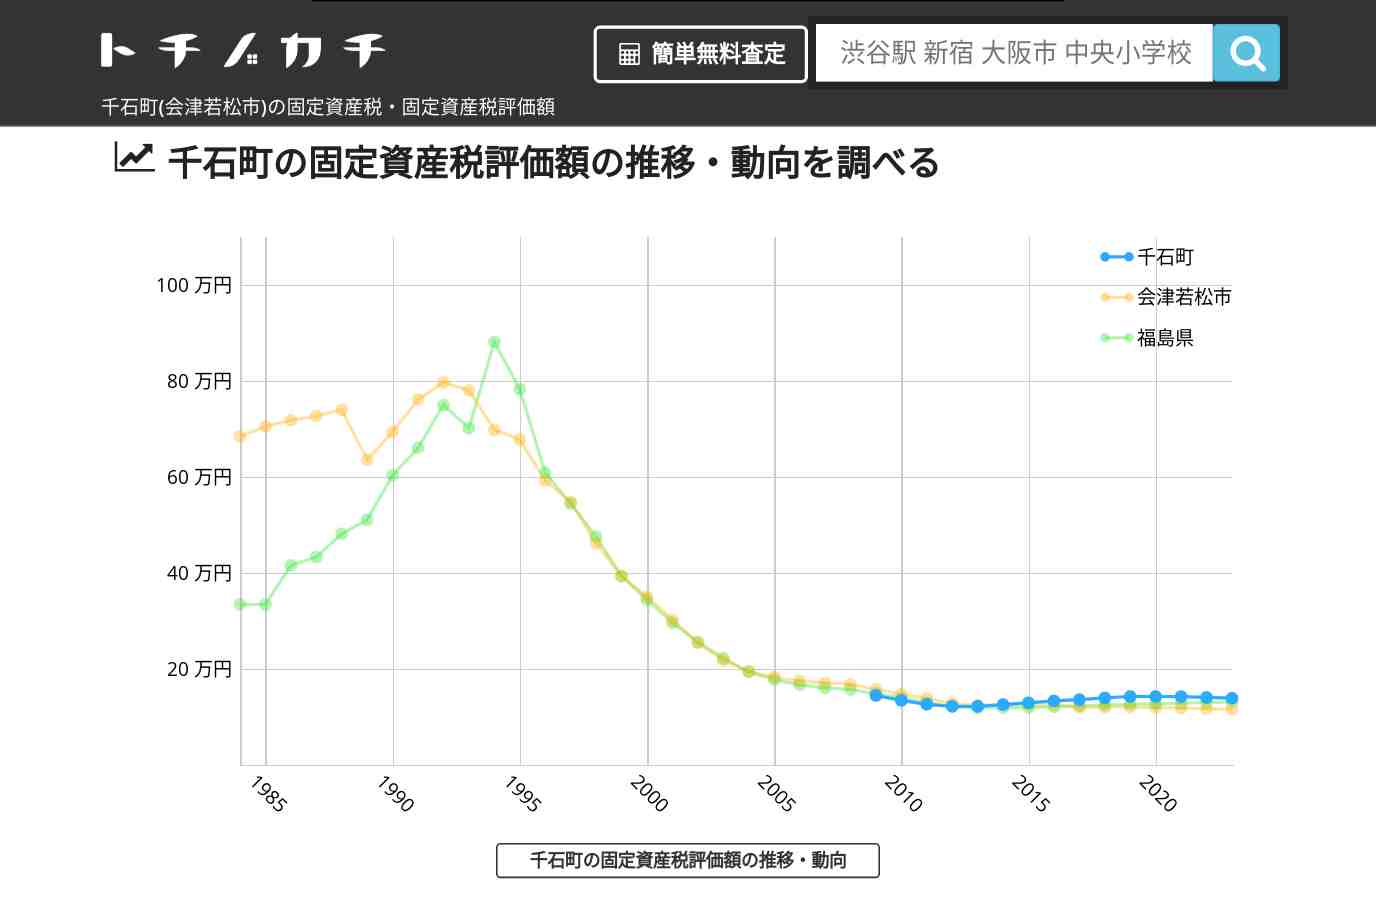 千石町(会津若松市)の固定資産税・固定資産税評価額 | トチノカチ